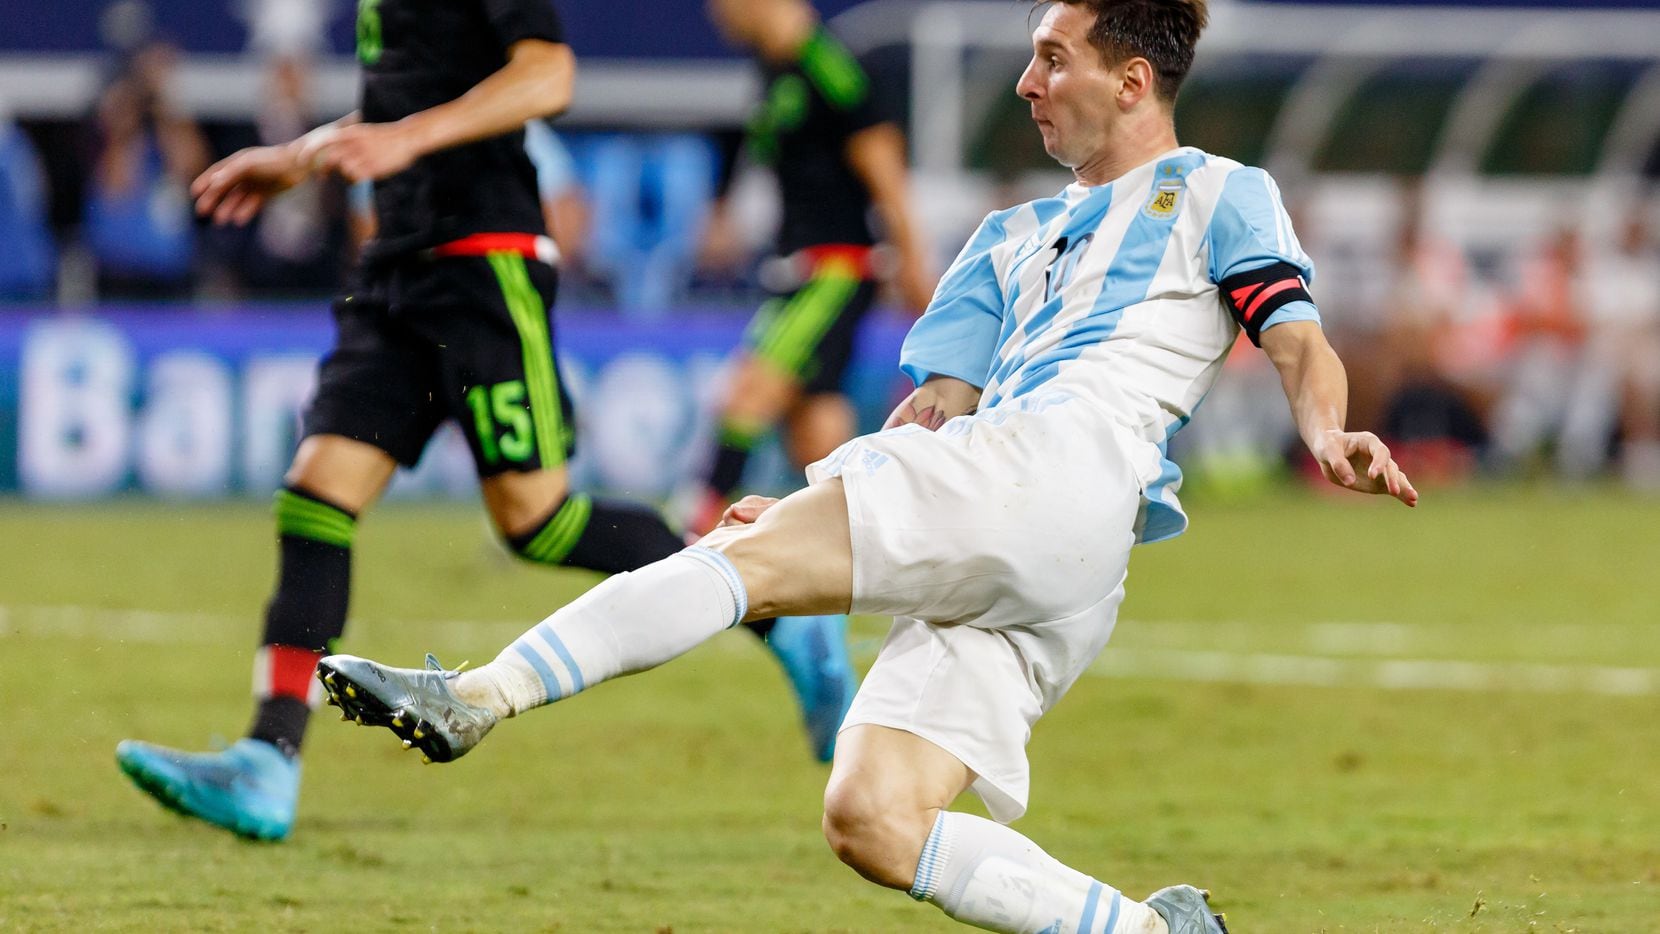 El argentino Lionel Messi anotó un gol de alta ejecución técnica en el minuto 88 del partido...